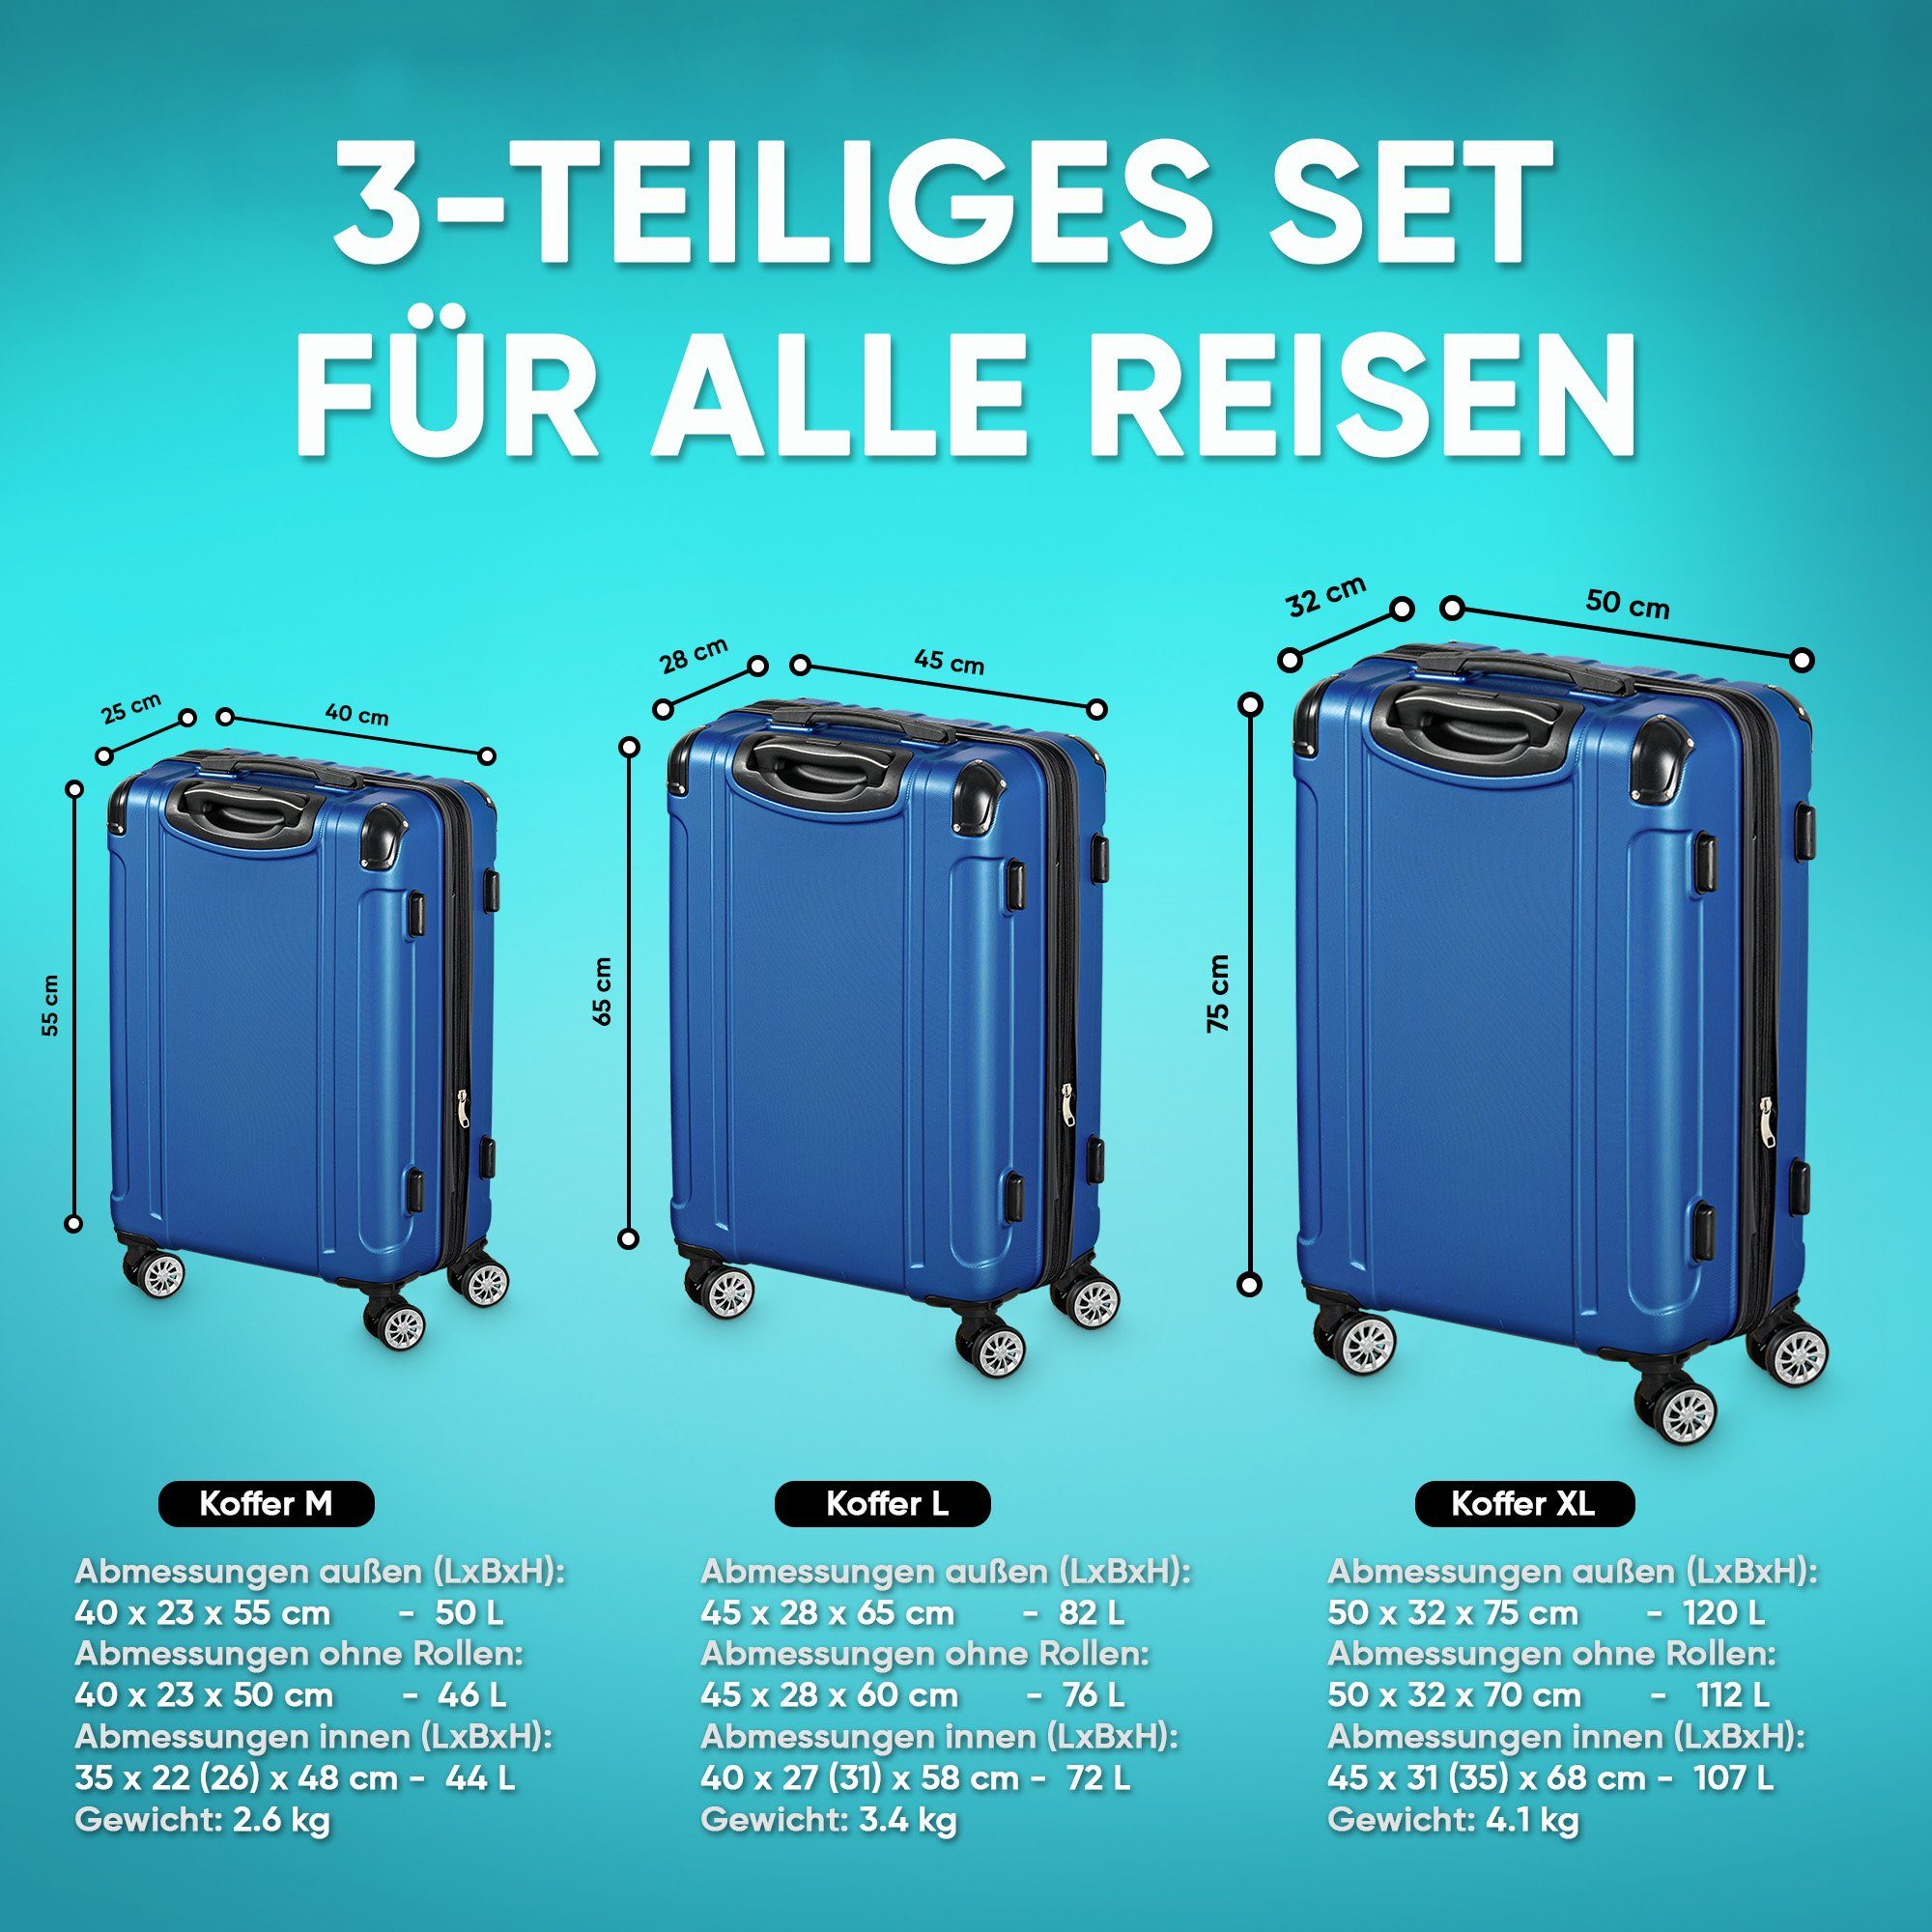 Reisekoffer nebel-blau teilig Kofferset VESKA Hartschalenkoffer Koffer Trolley ABS-Hartschale, Zahlenschloss mit TSA Rollkoffer 3 Trolleyset 4 Rollen,